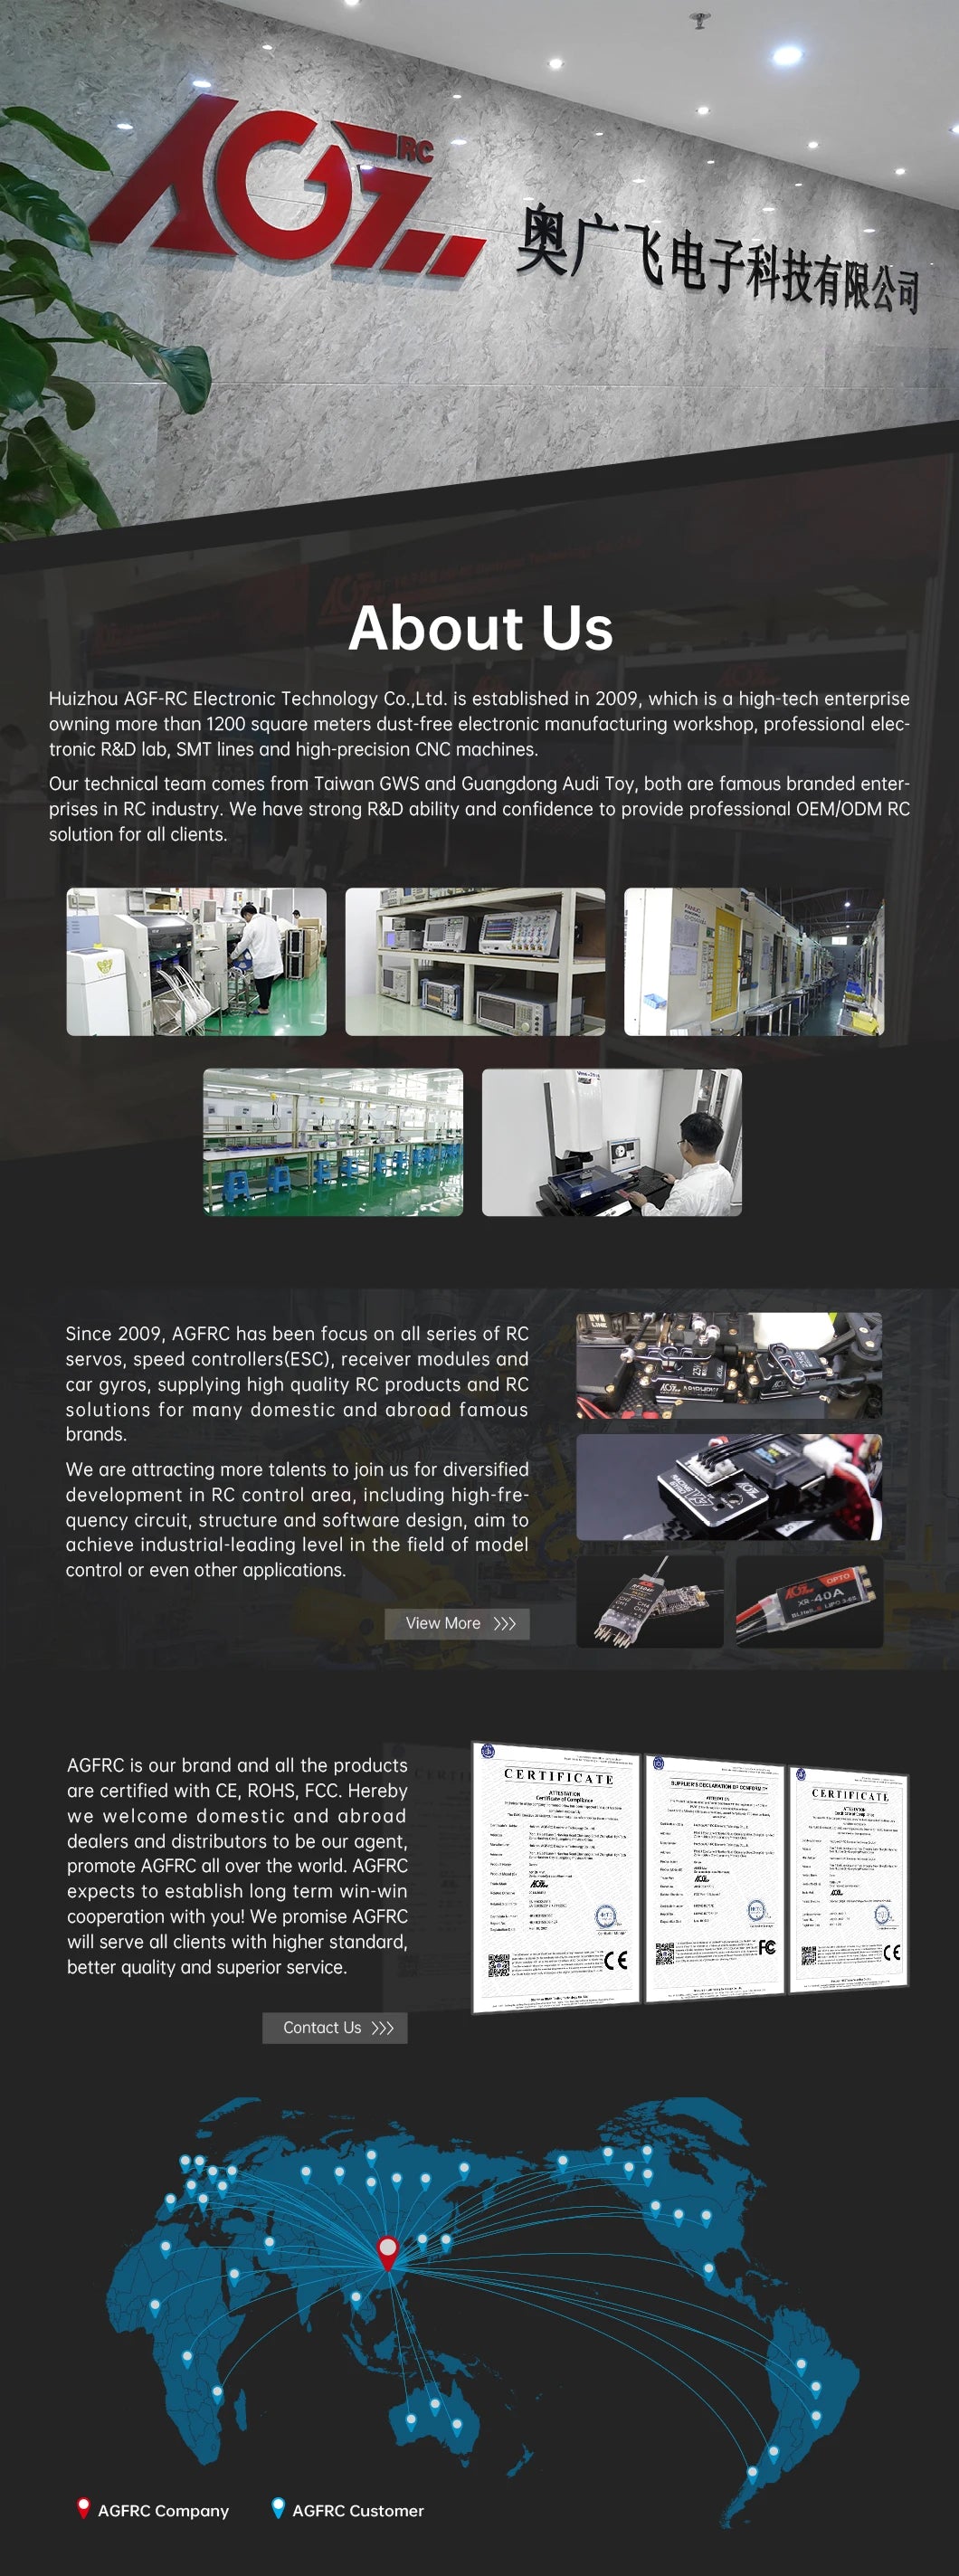 AGFRC A80BHMW V2, Huizhou AGF-RC Electronic Technology Co-,Ltd. is a